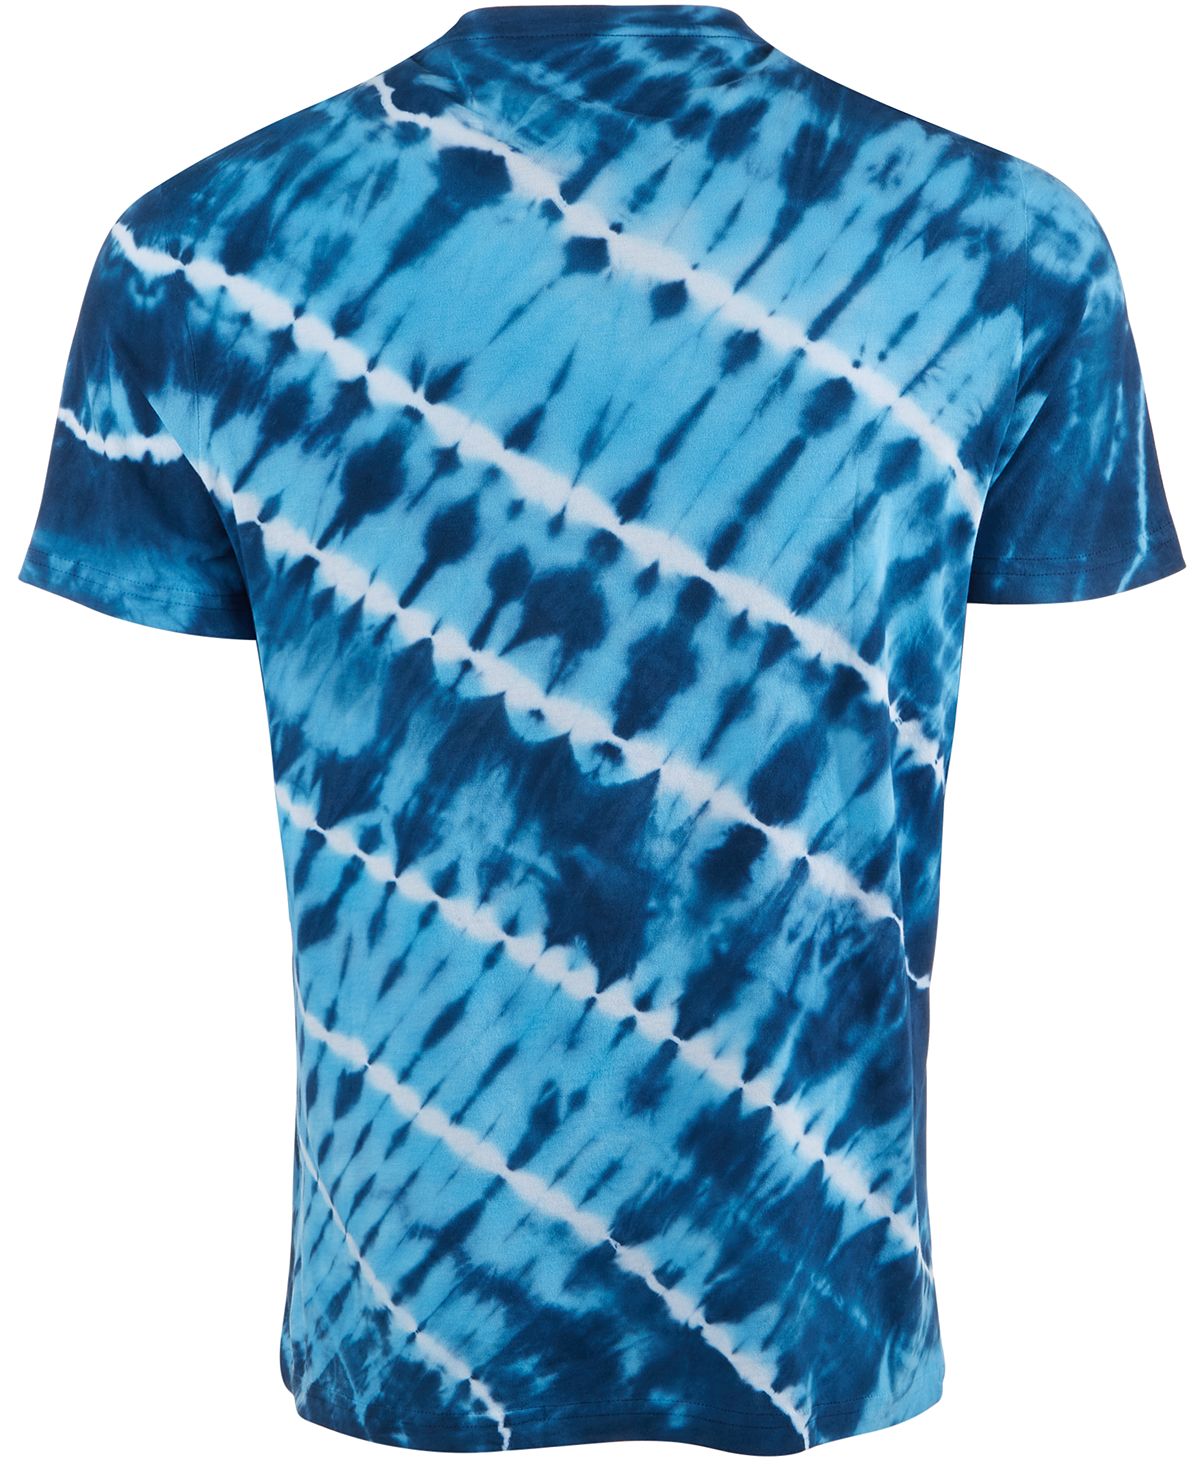 Sun + Stone Sun + Stone Tidal Wave Tie Dye T-shirt Seacrest A